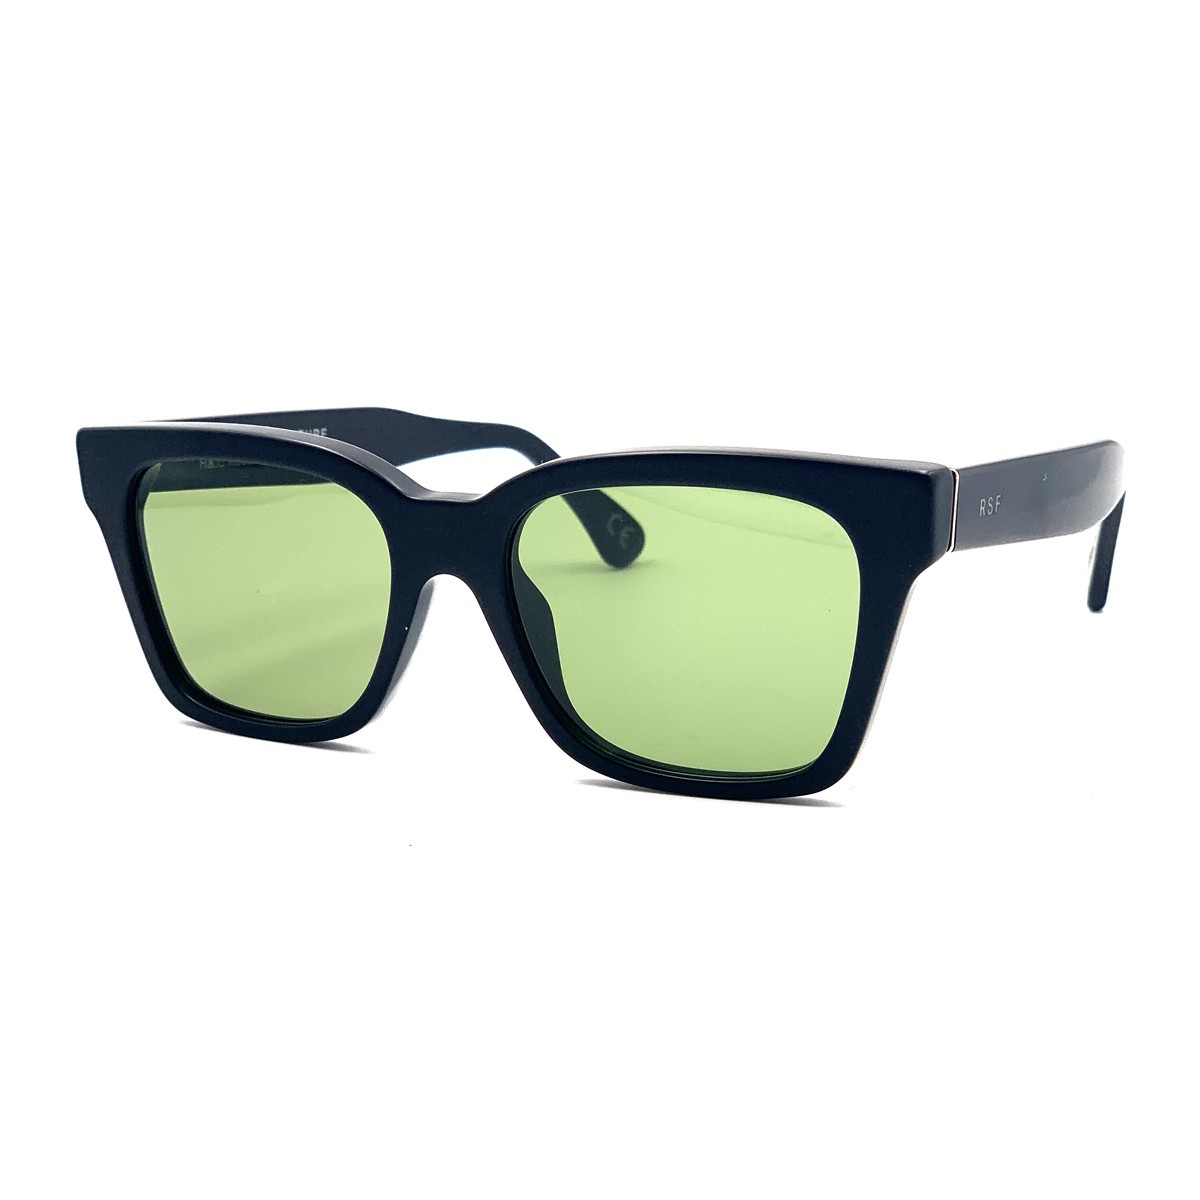 Super America Black Matte | Unisex sunglasses